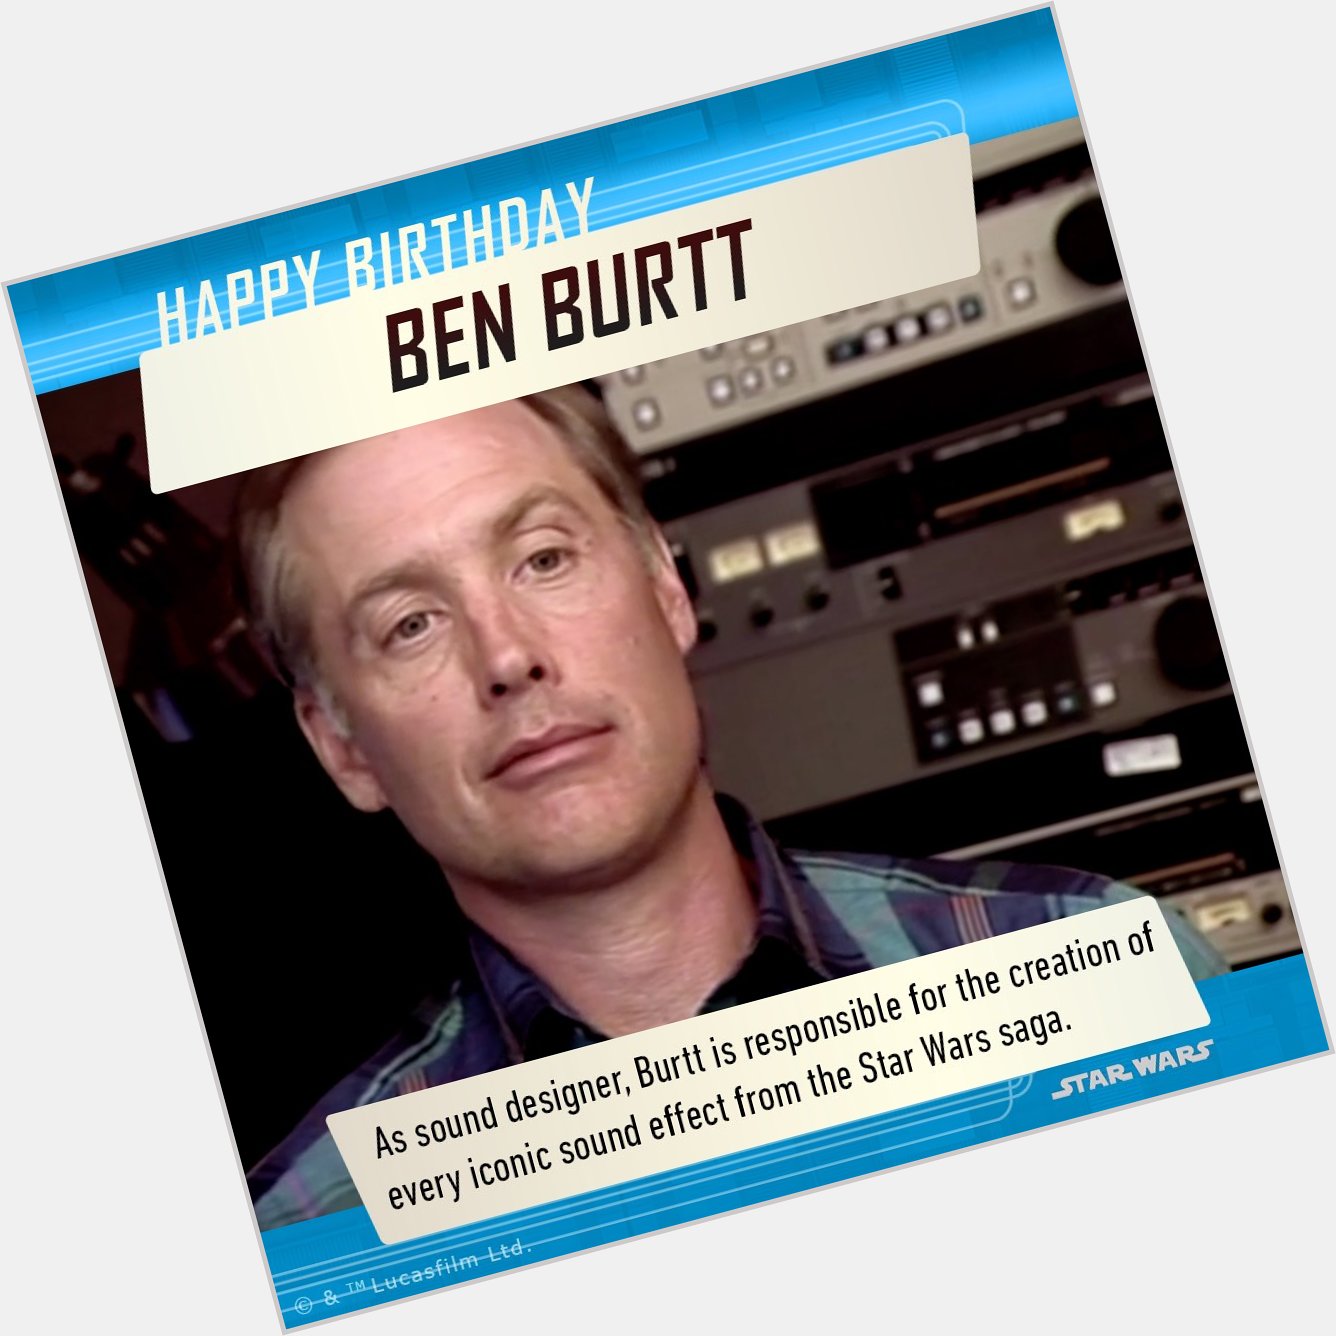 Happy Birthday Ben Burtt!  